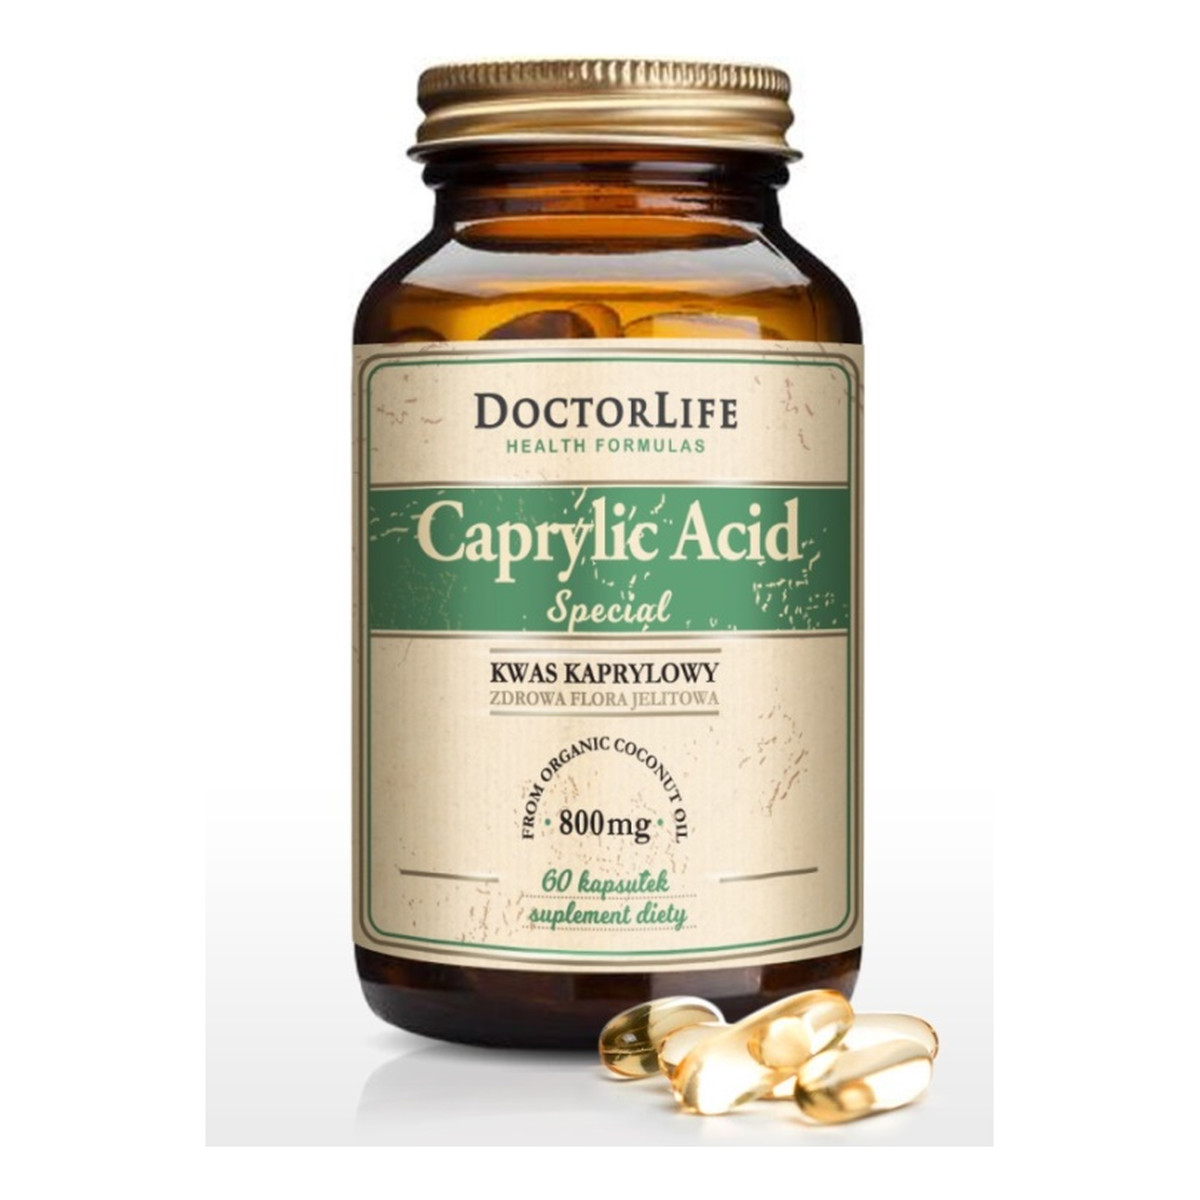 Doctor Life Caprylic acid special kwas kaprylowy 800mg suplement diety 60 kapsułek